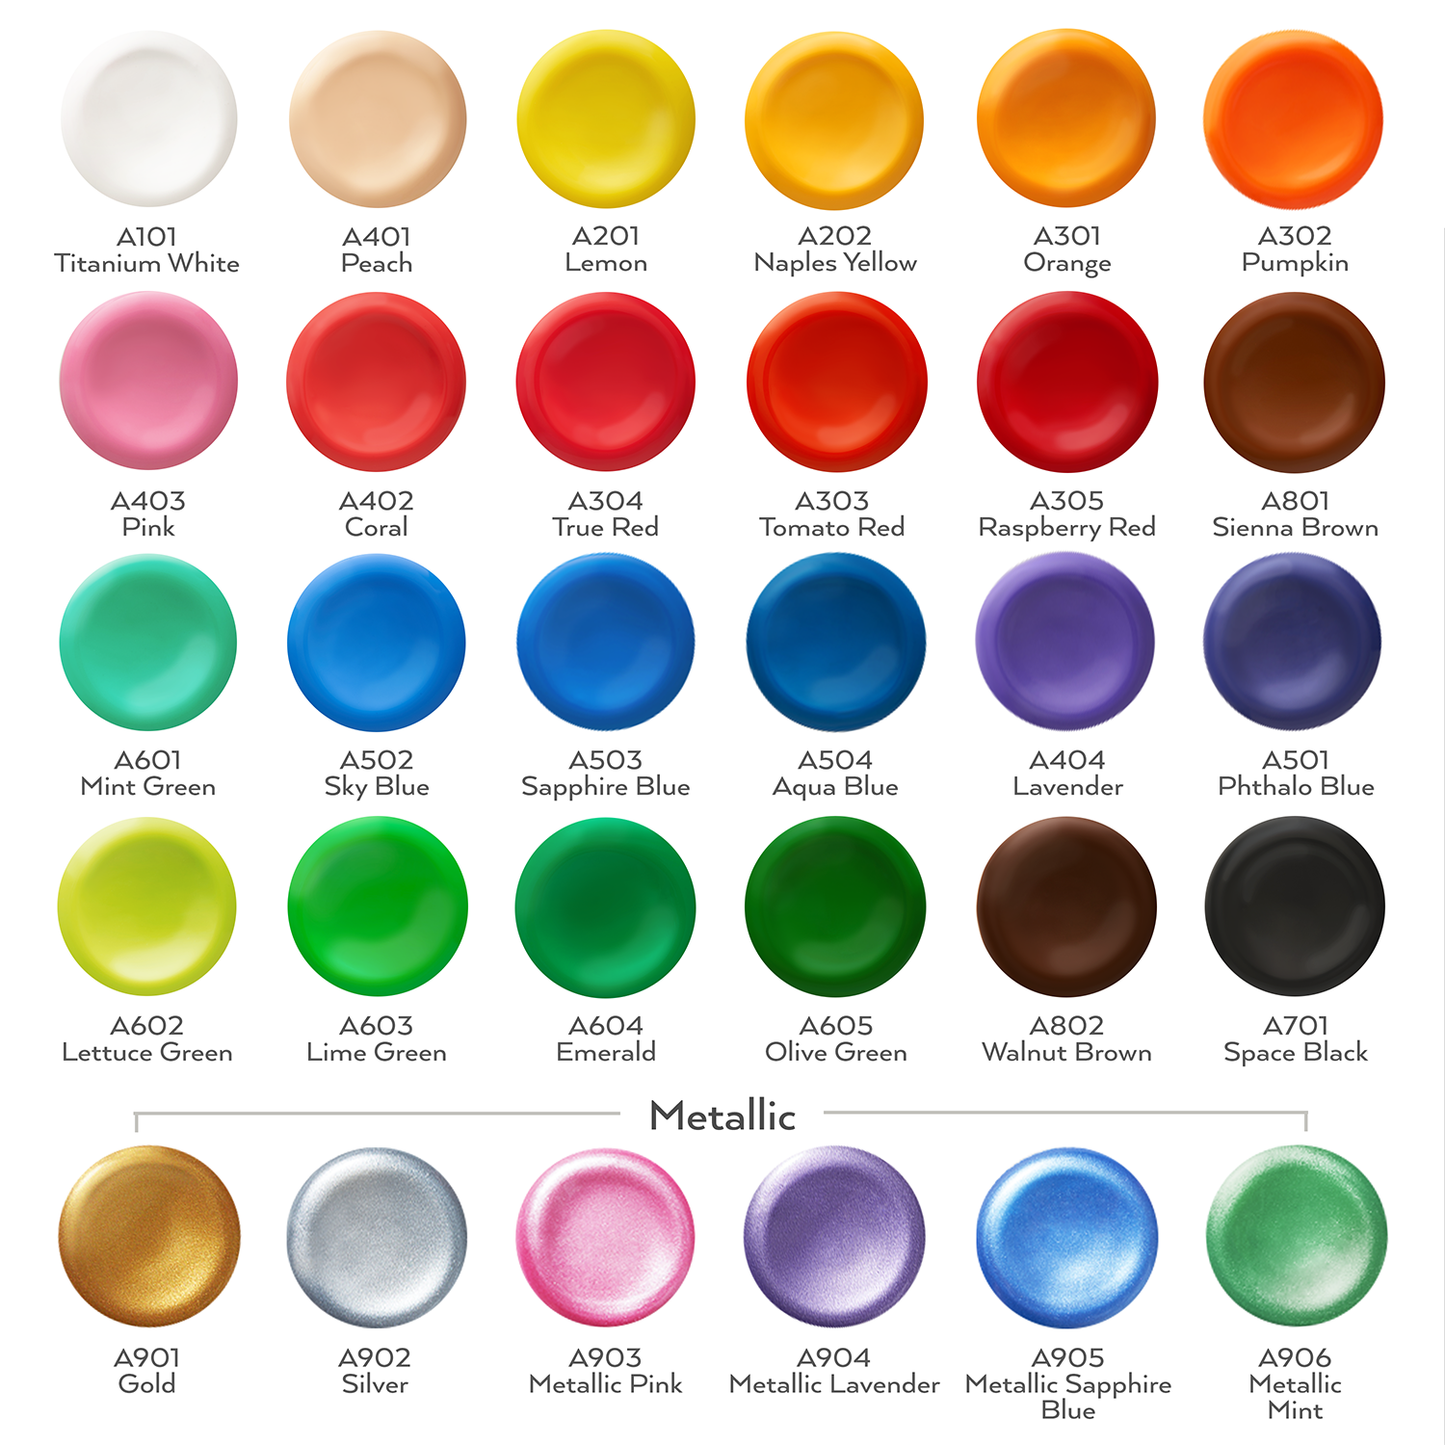 Kids Finger Paints, Assorted Colors, 30ml - Set of 30